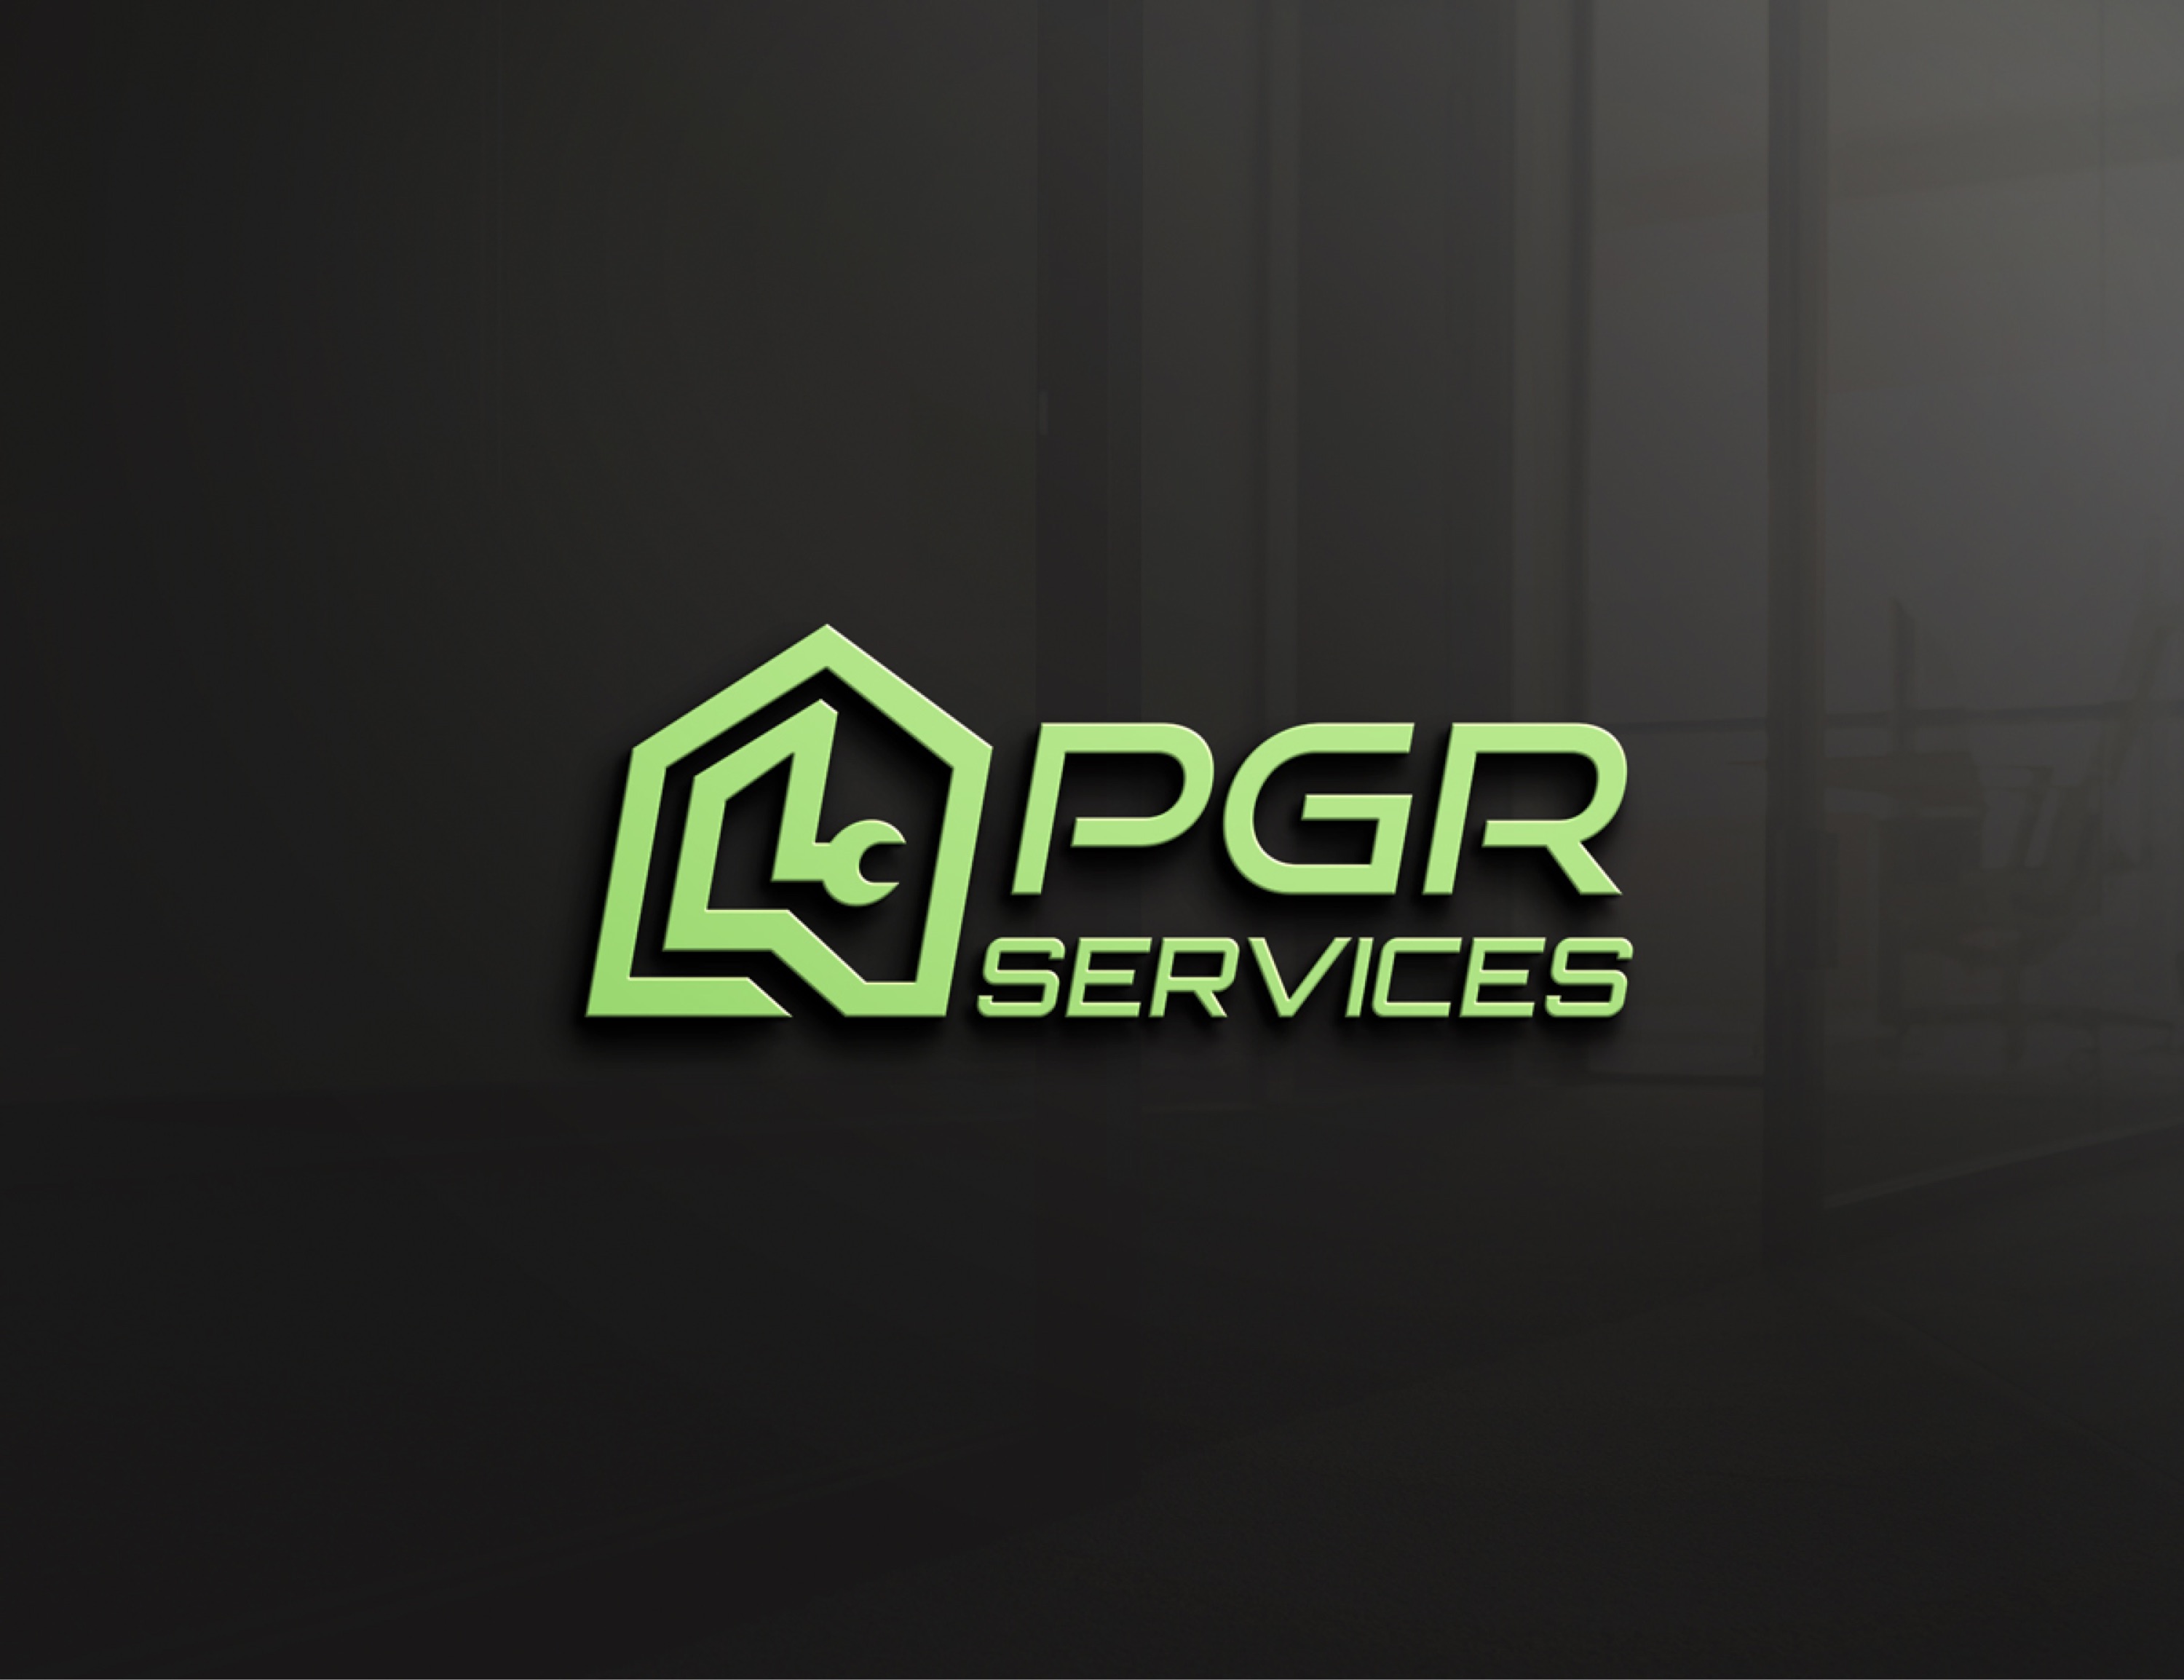 PGR Services Logo